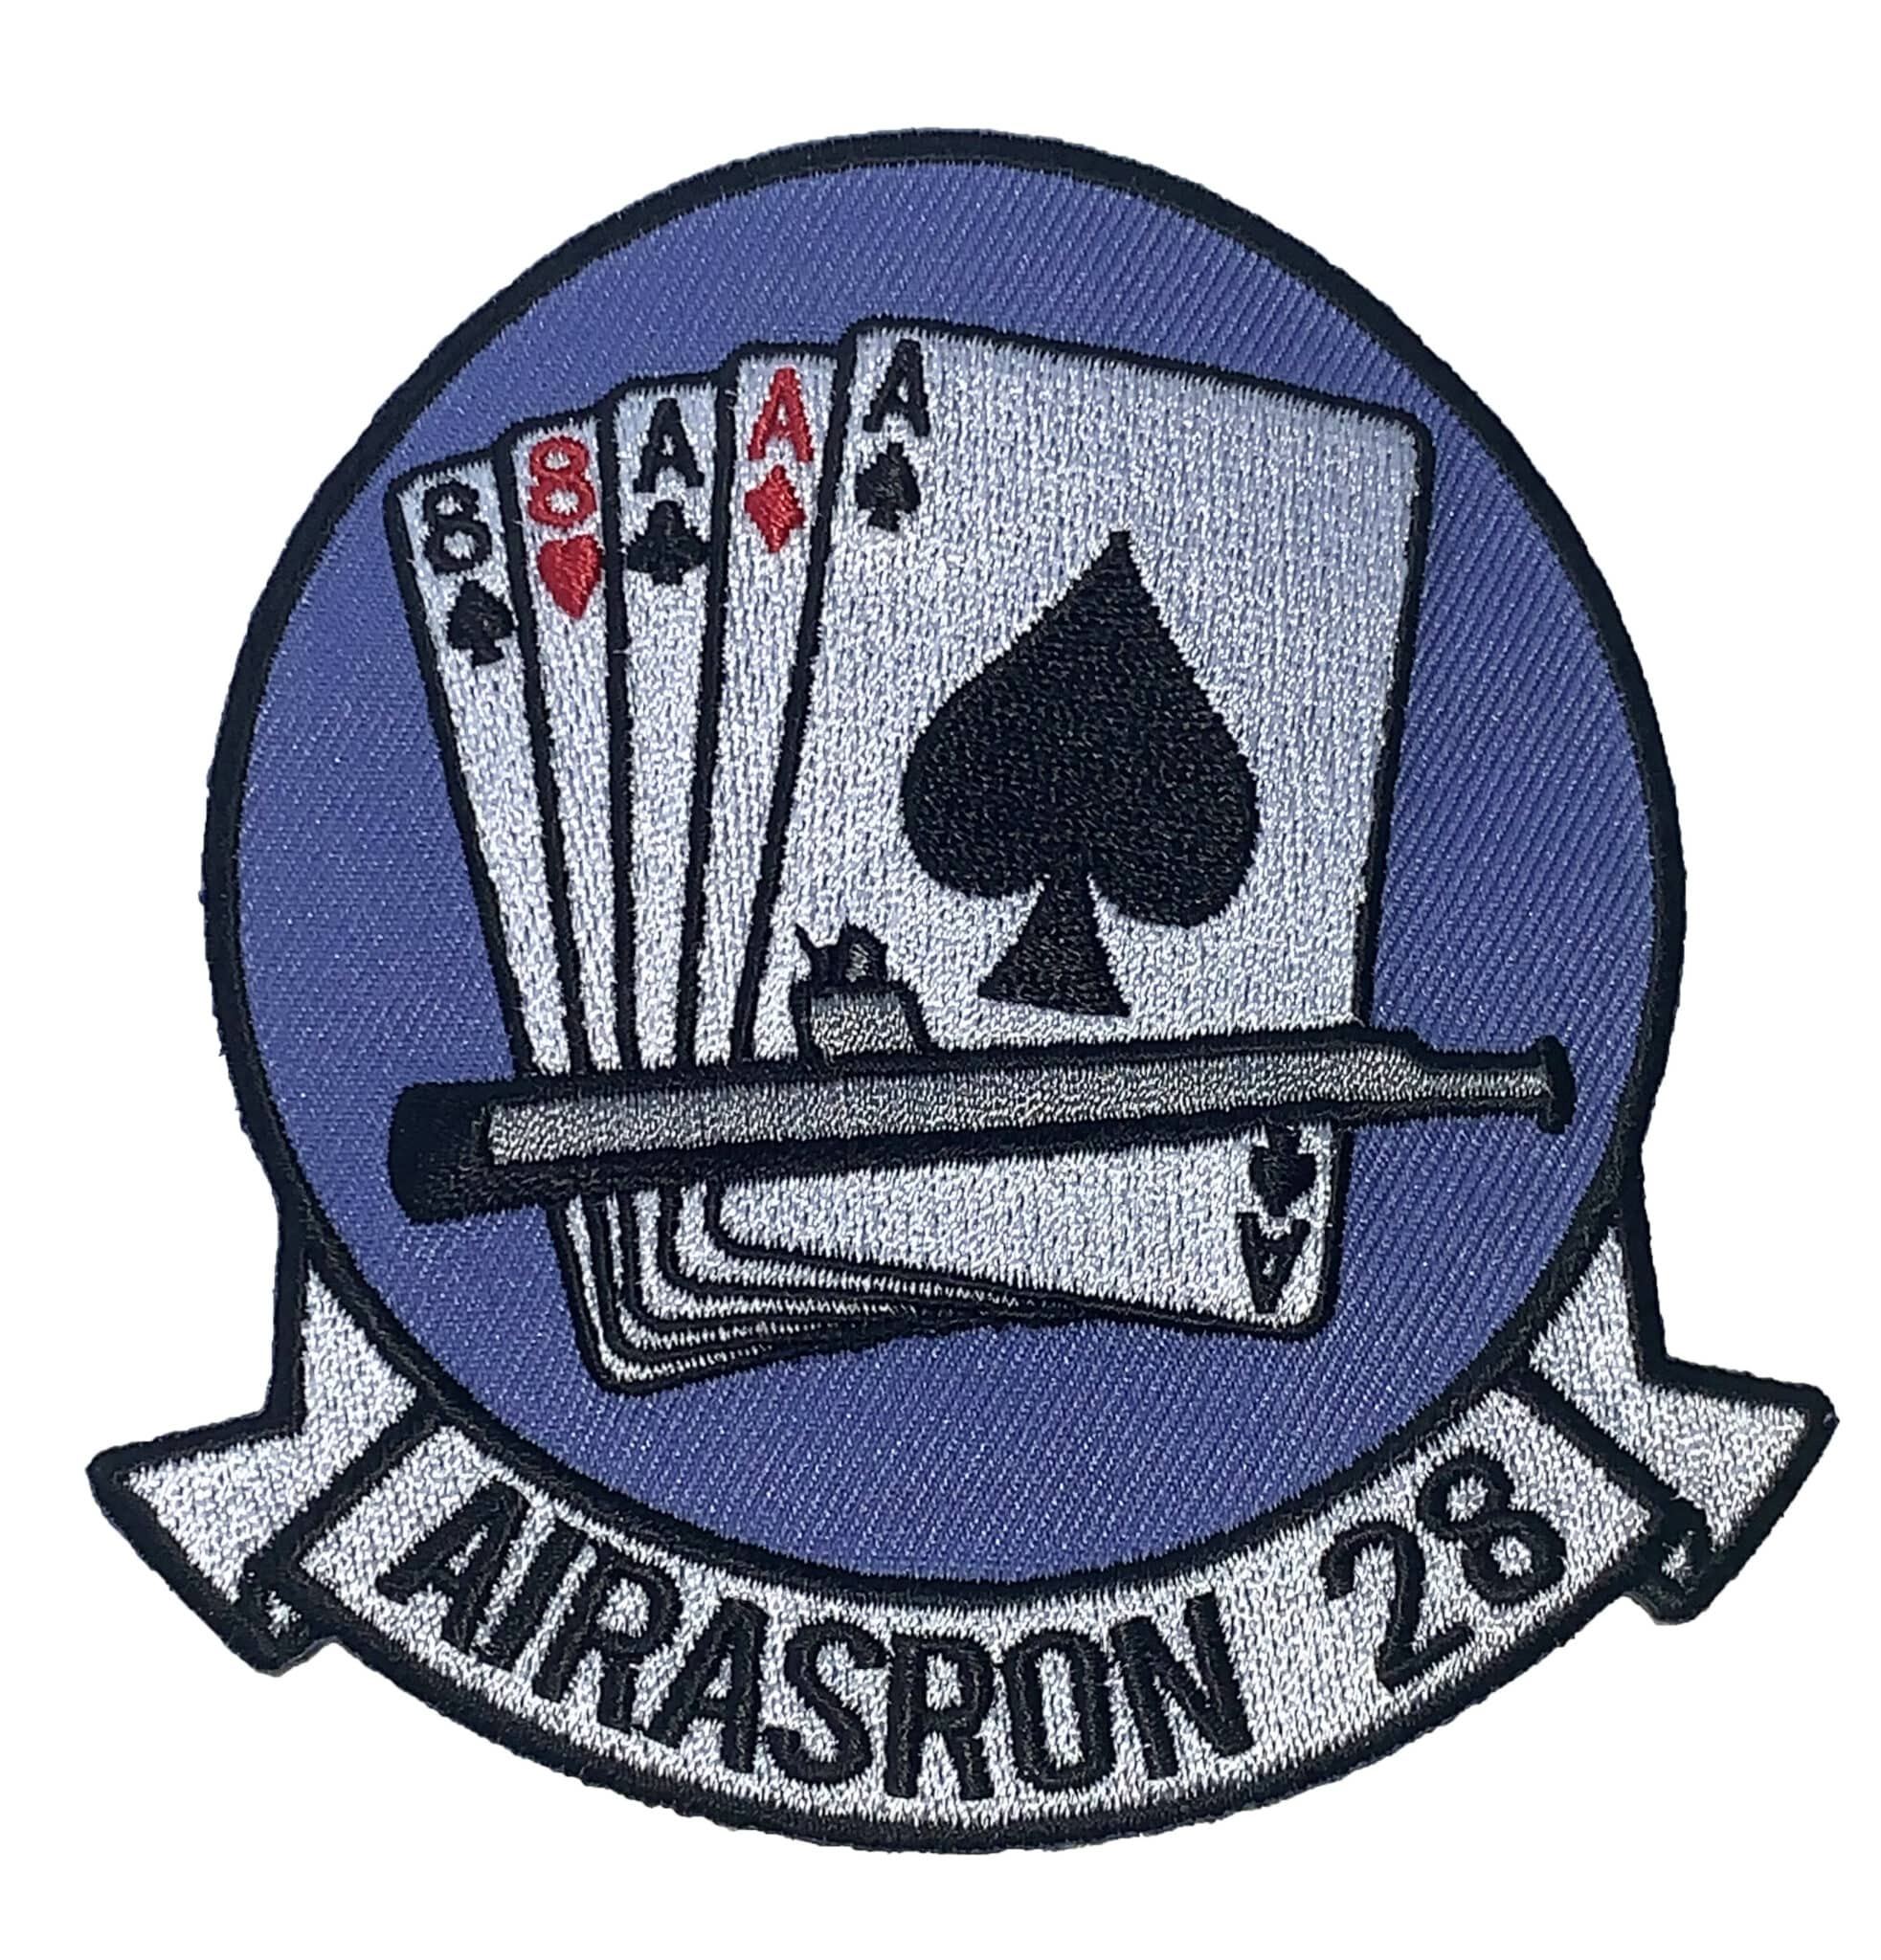 VS-28 Gamblers Squadron Patch – Plastic Backing